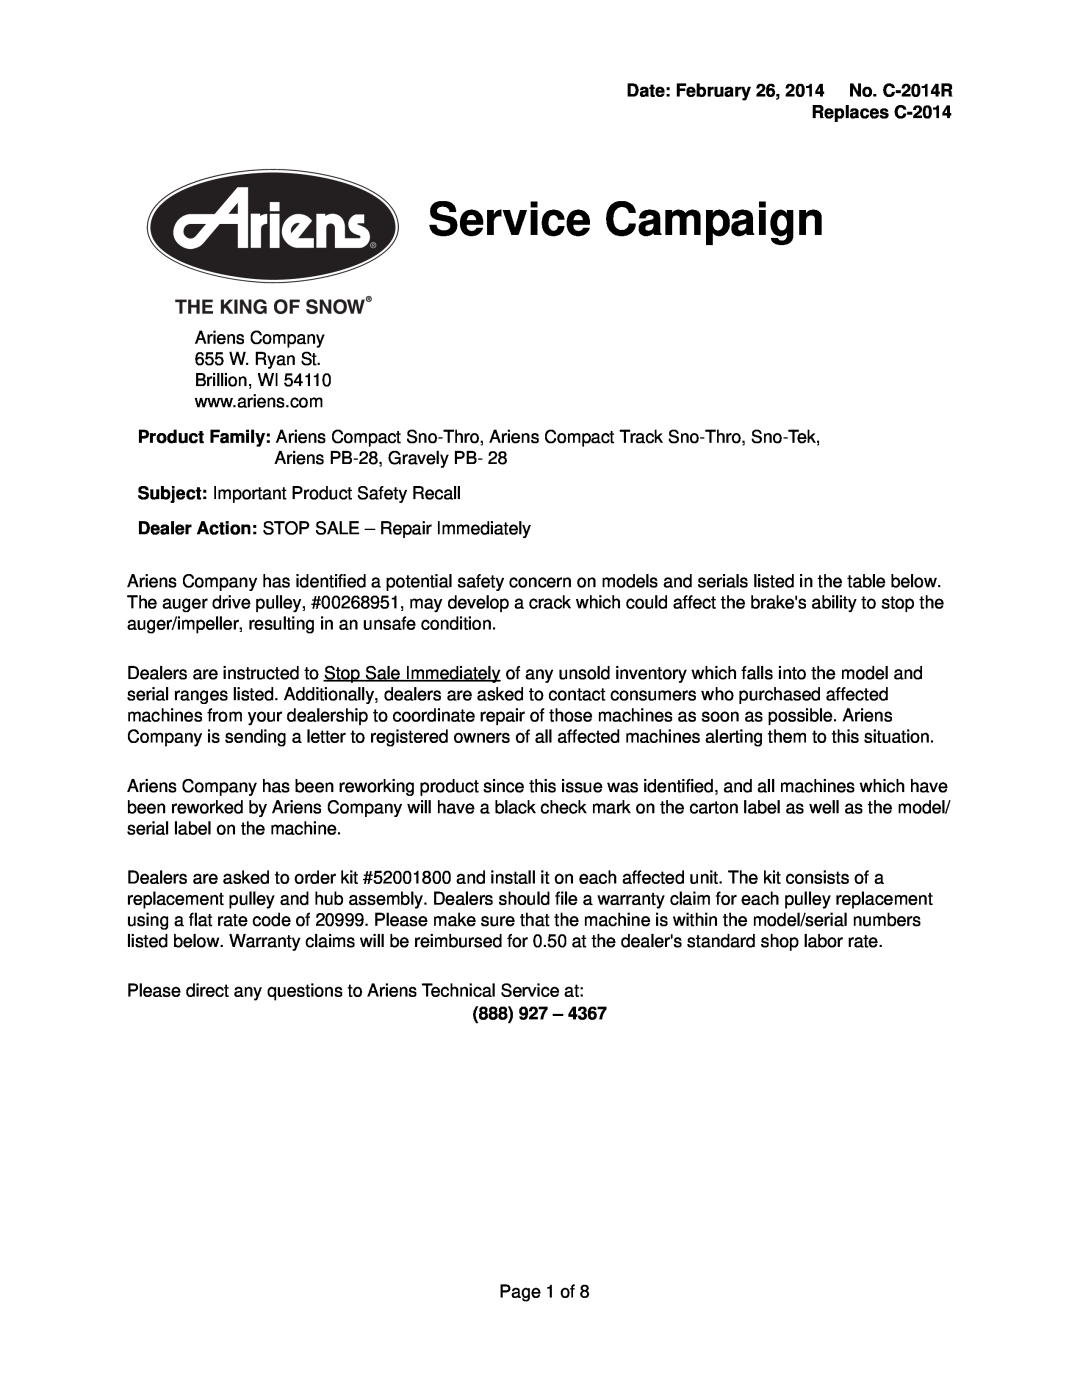 Ariens warranty Date February 26, 2014 No. C-2014R Replaces C-2014, 888 927, Service Campaign 